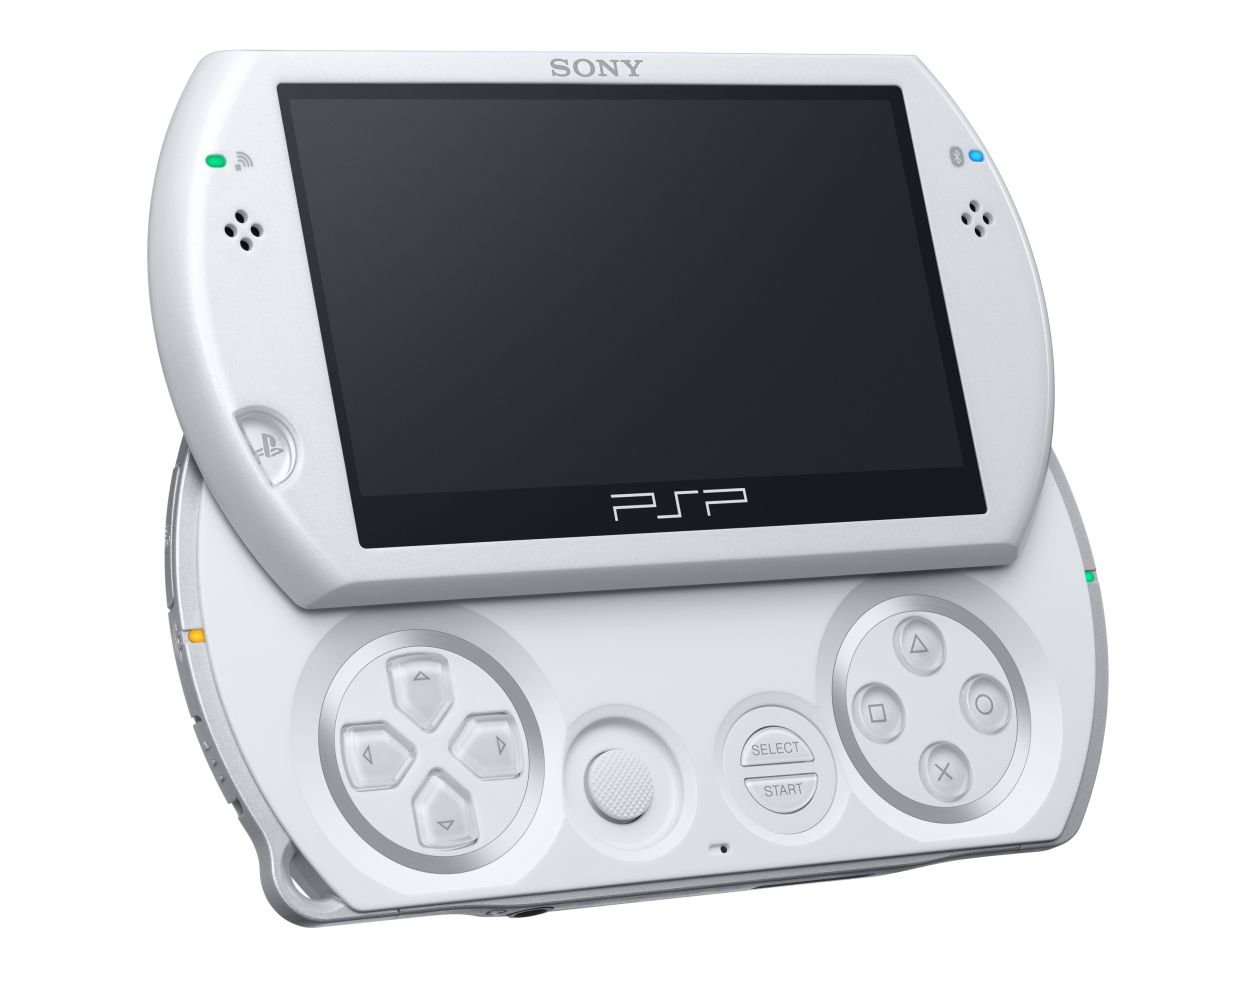 Sony PlayStation Portable (PSP) Go